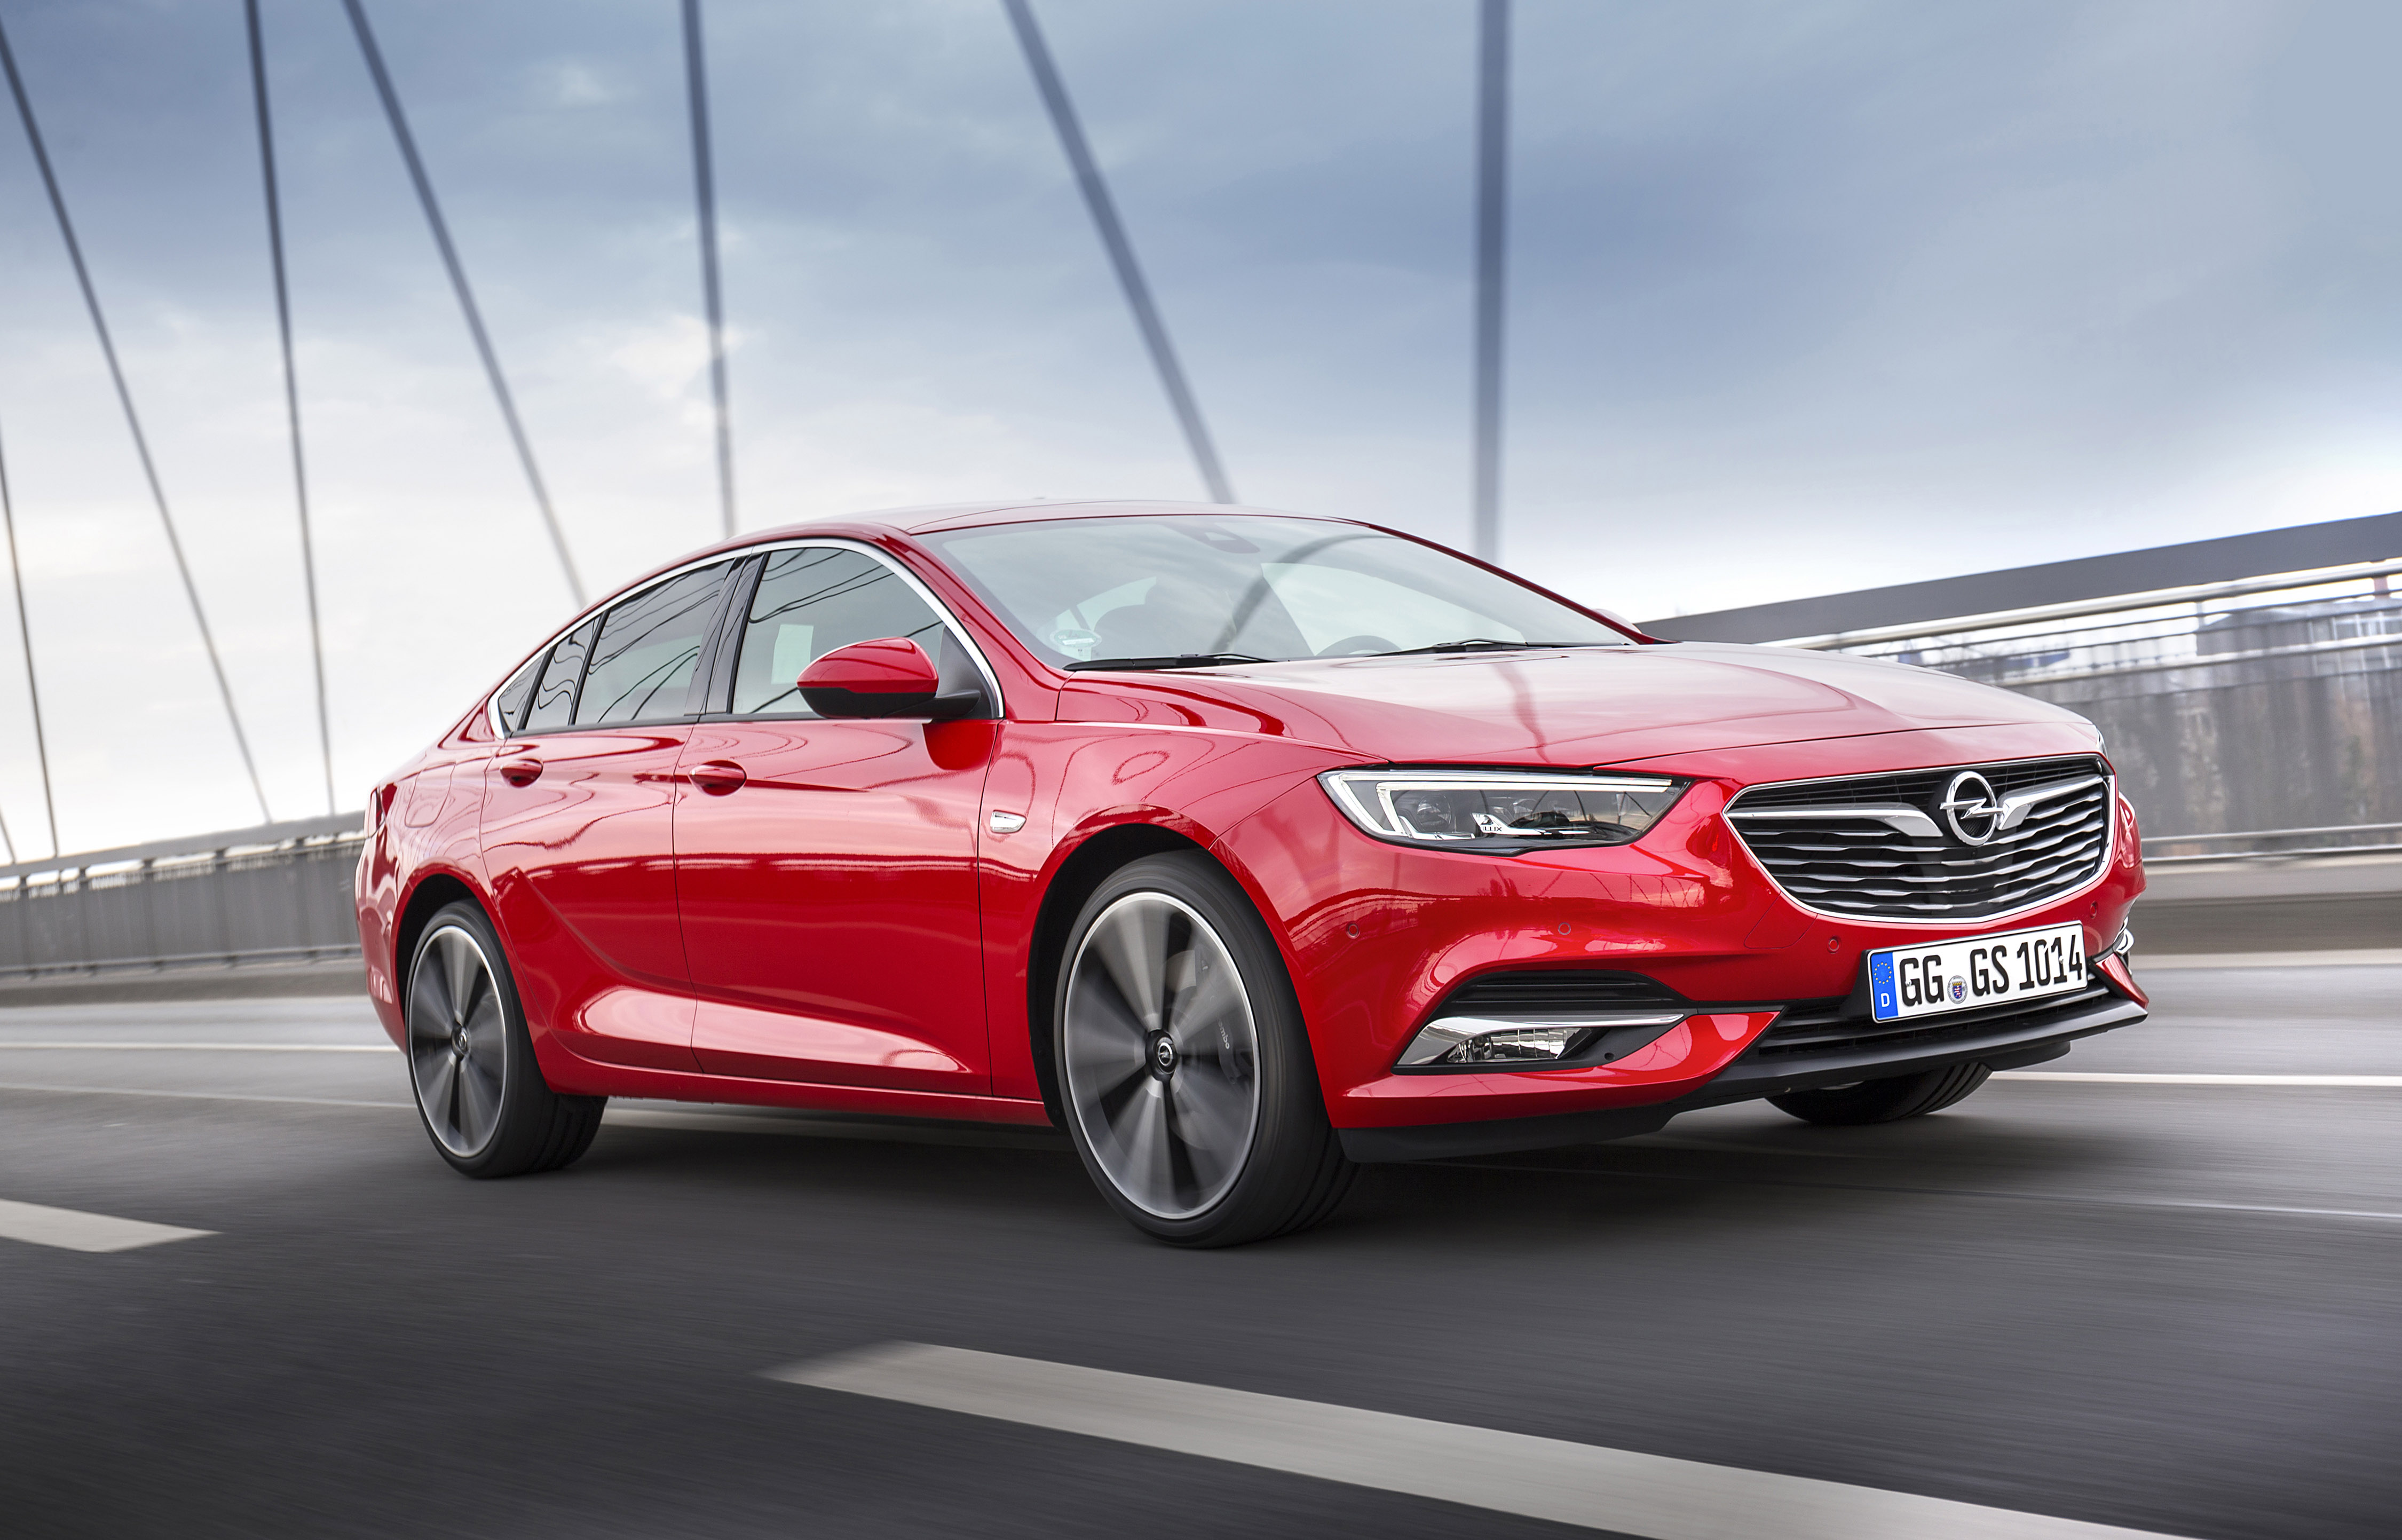 Nu al 100.000 orders voor nieuwe Opel Insignia